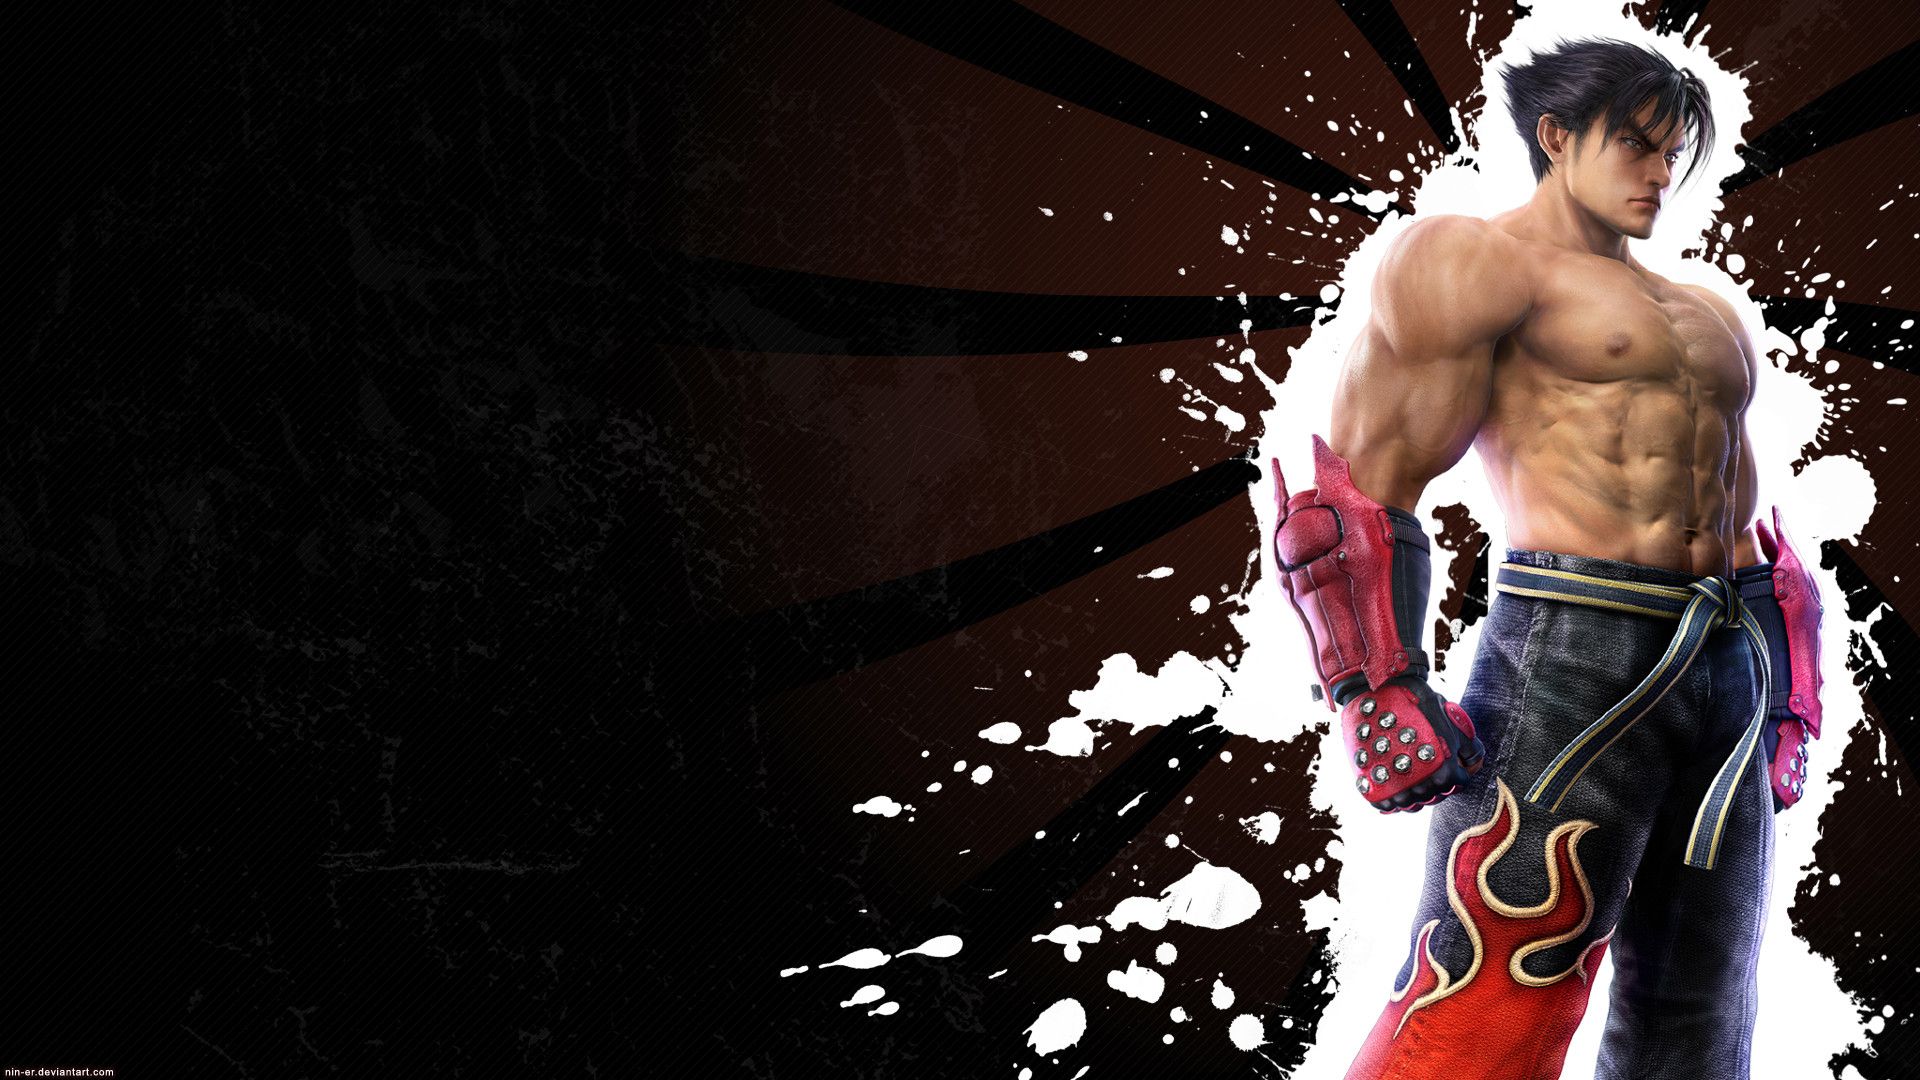 Tekken Jin Kazama HD Wallpaper Wallpapercharlie